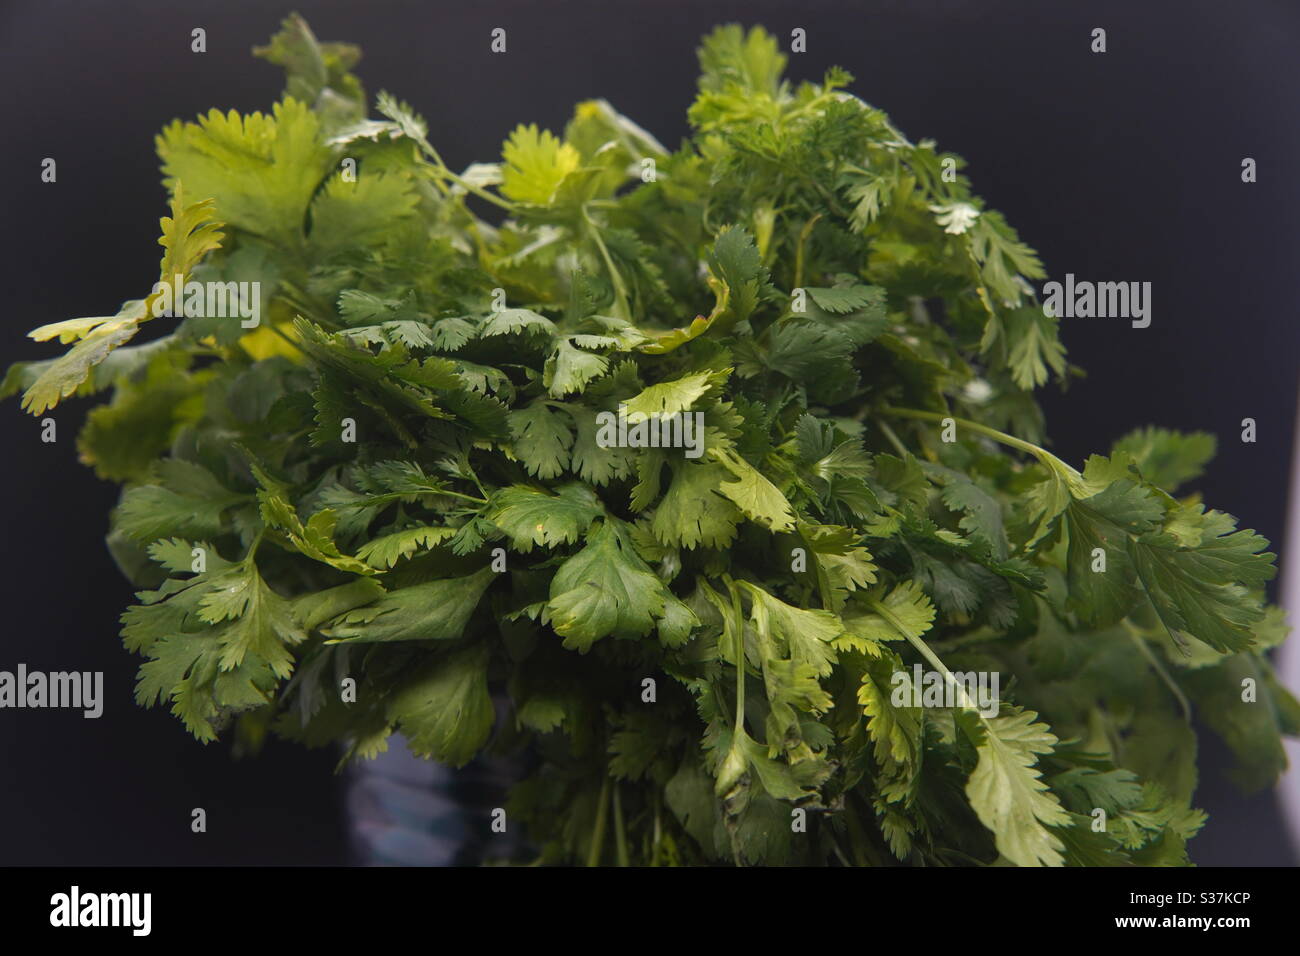 Bunch of fresh green cilantro herb Stock Photo